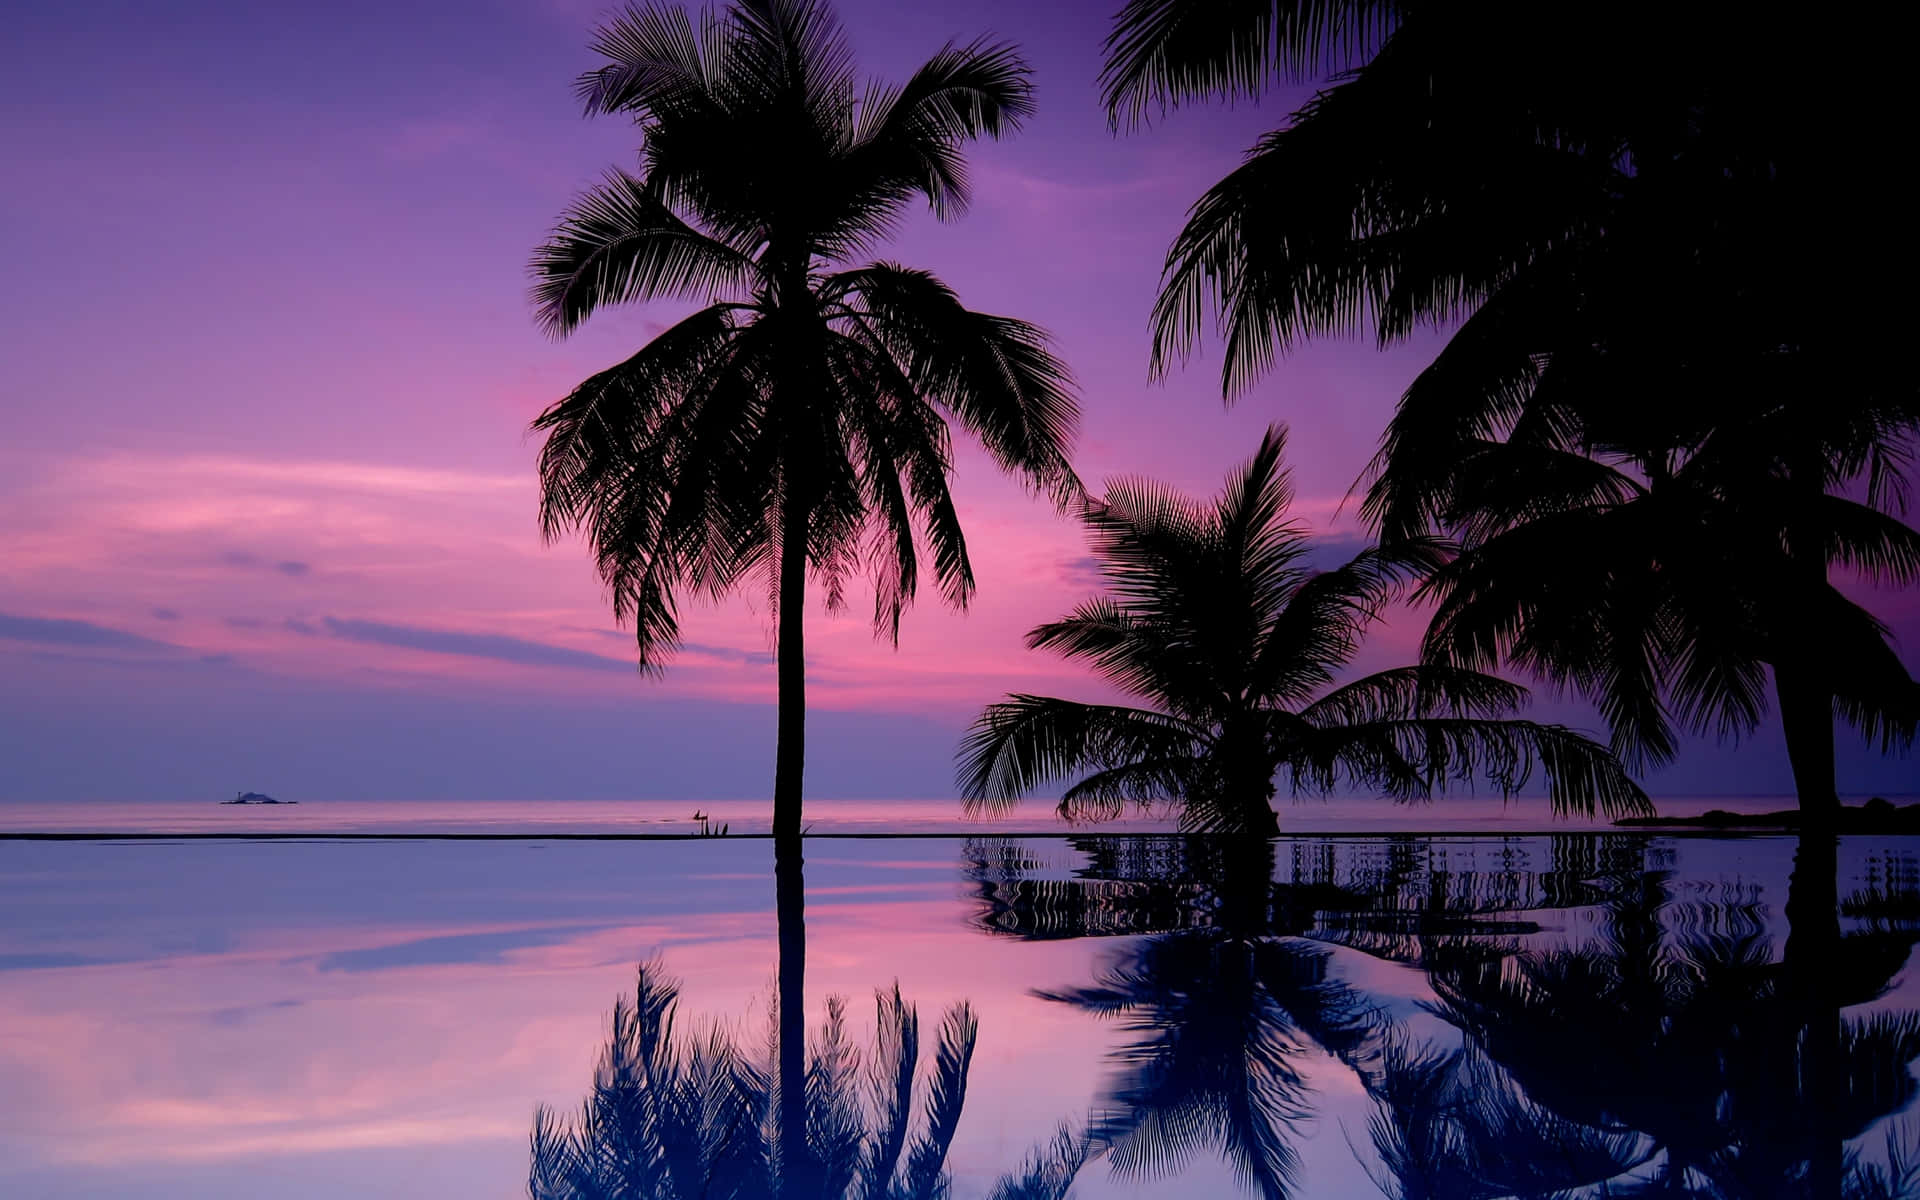 Enjoy the peacefulness of a Palm Tree-lined beach